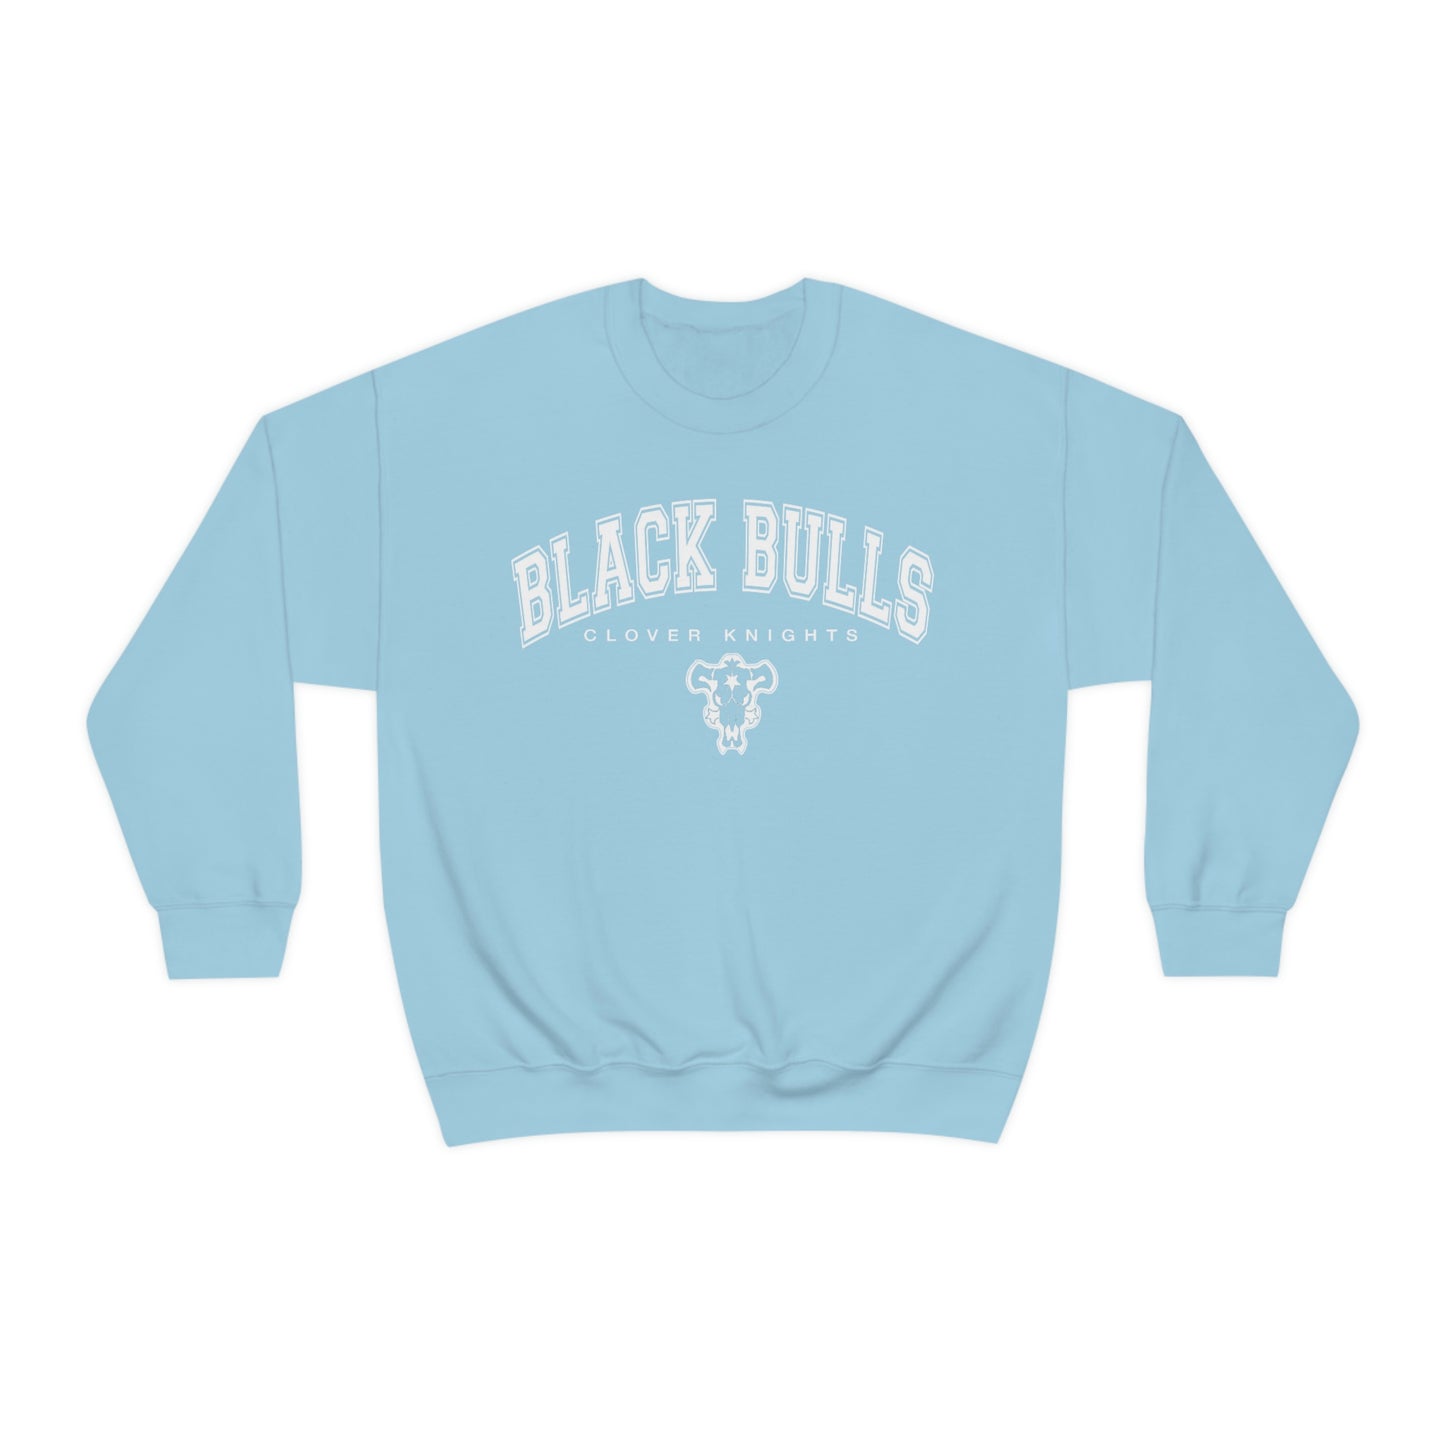 Black bull squad sweatshirt